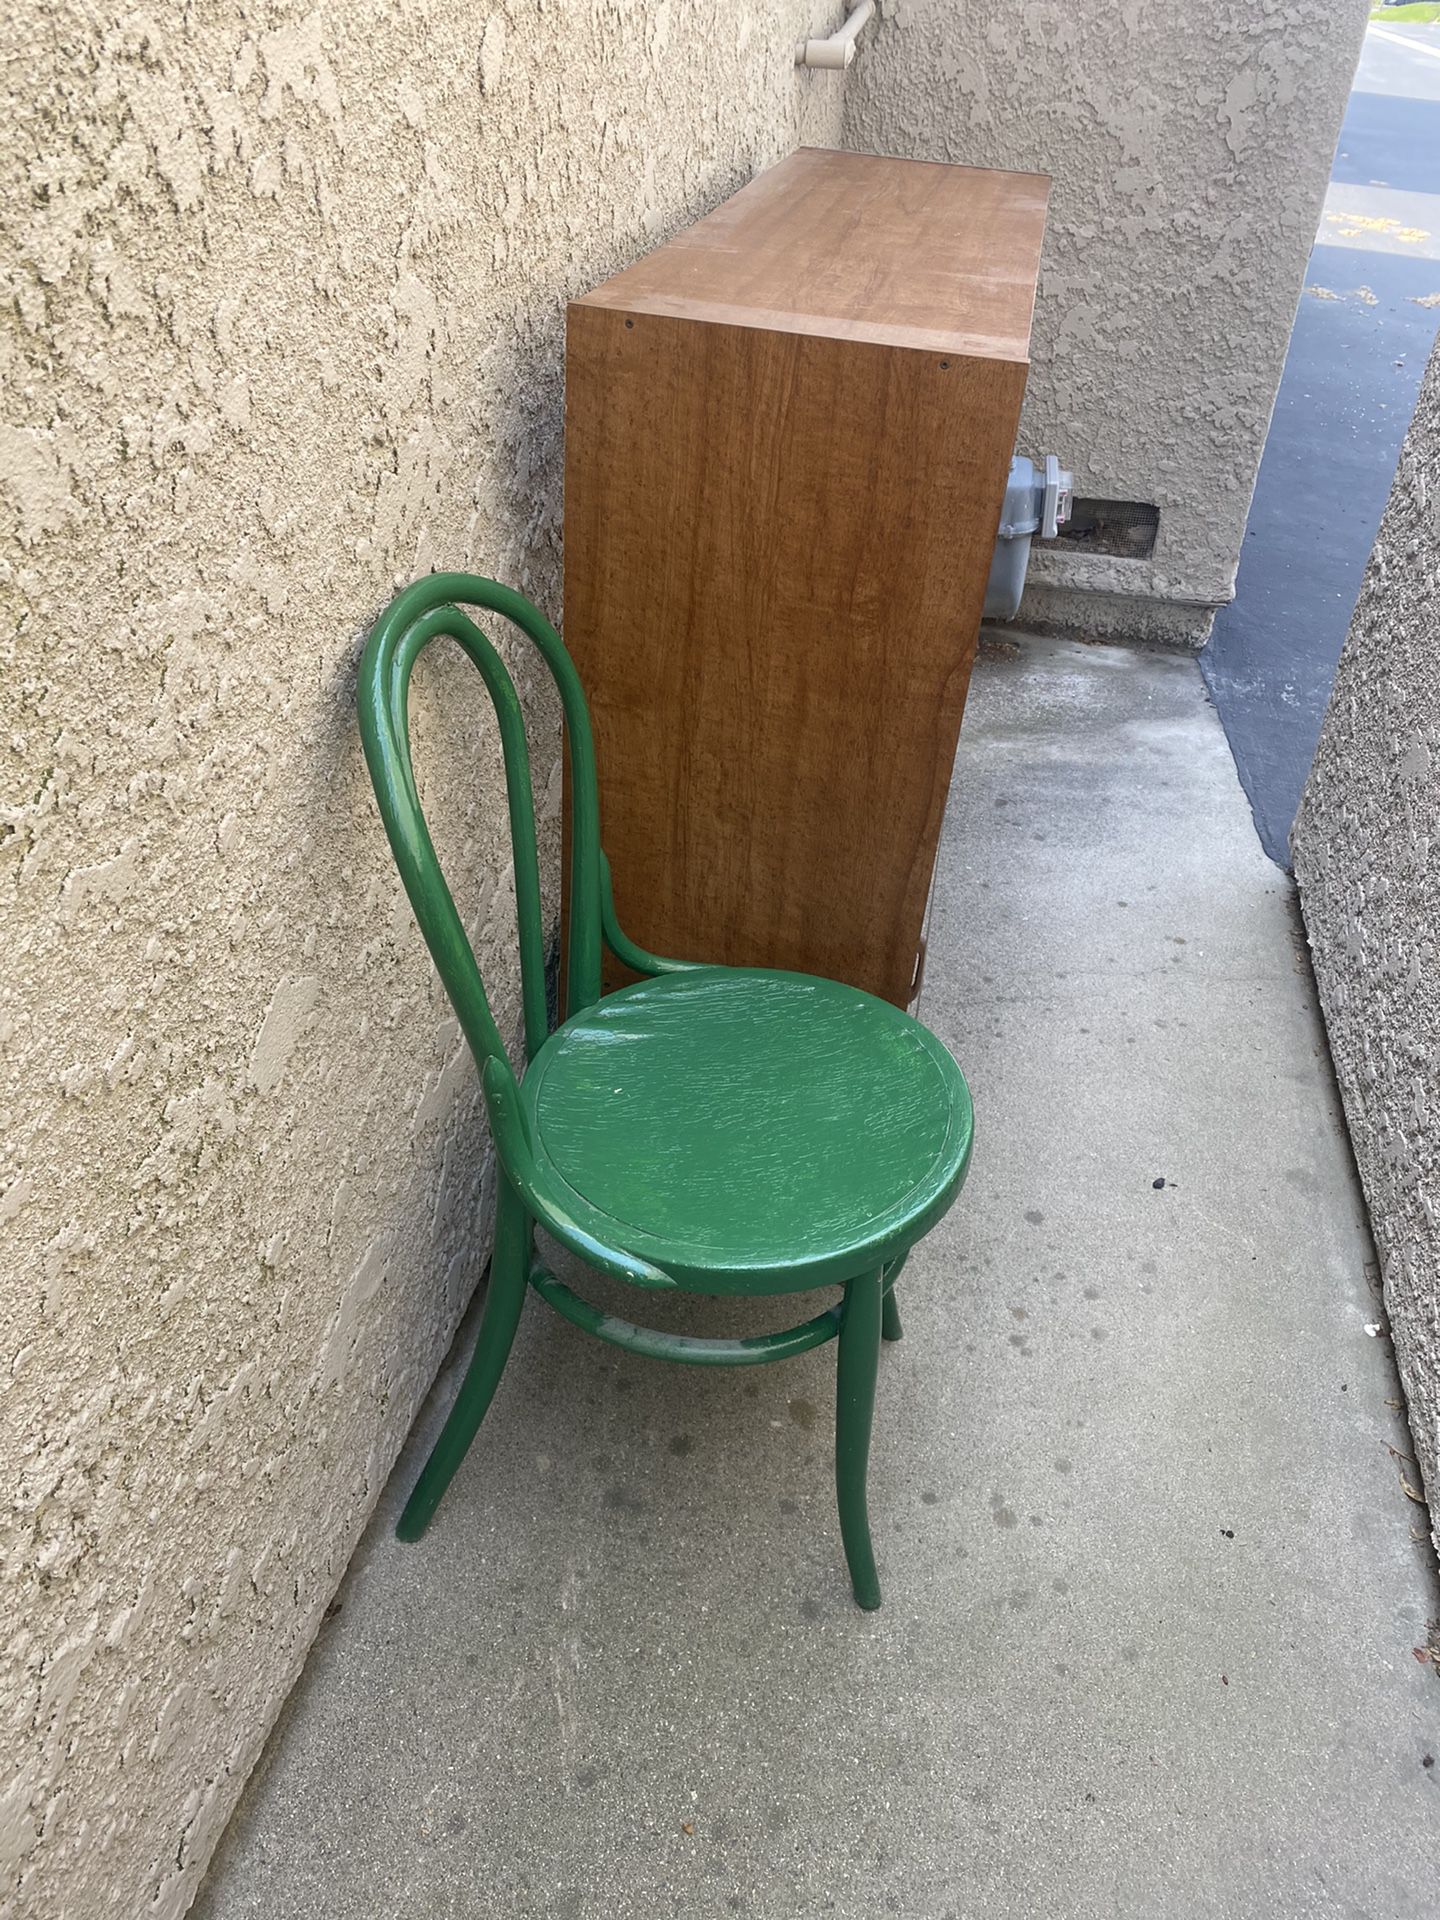 Free green chair metal.